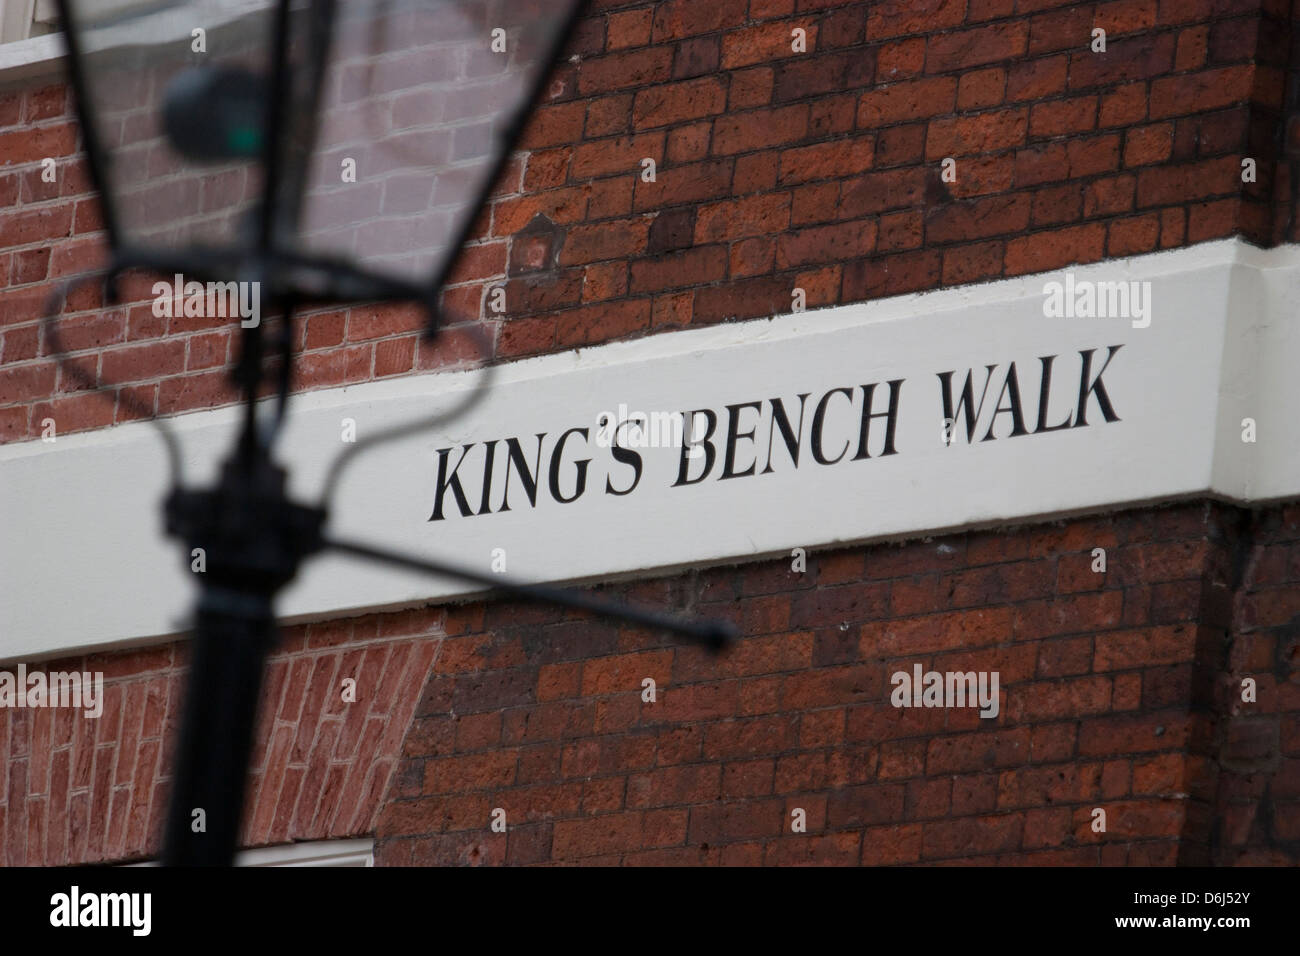 Kings bench walk, Temple, London Stock Photo